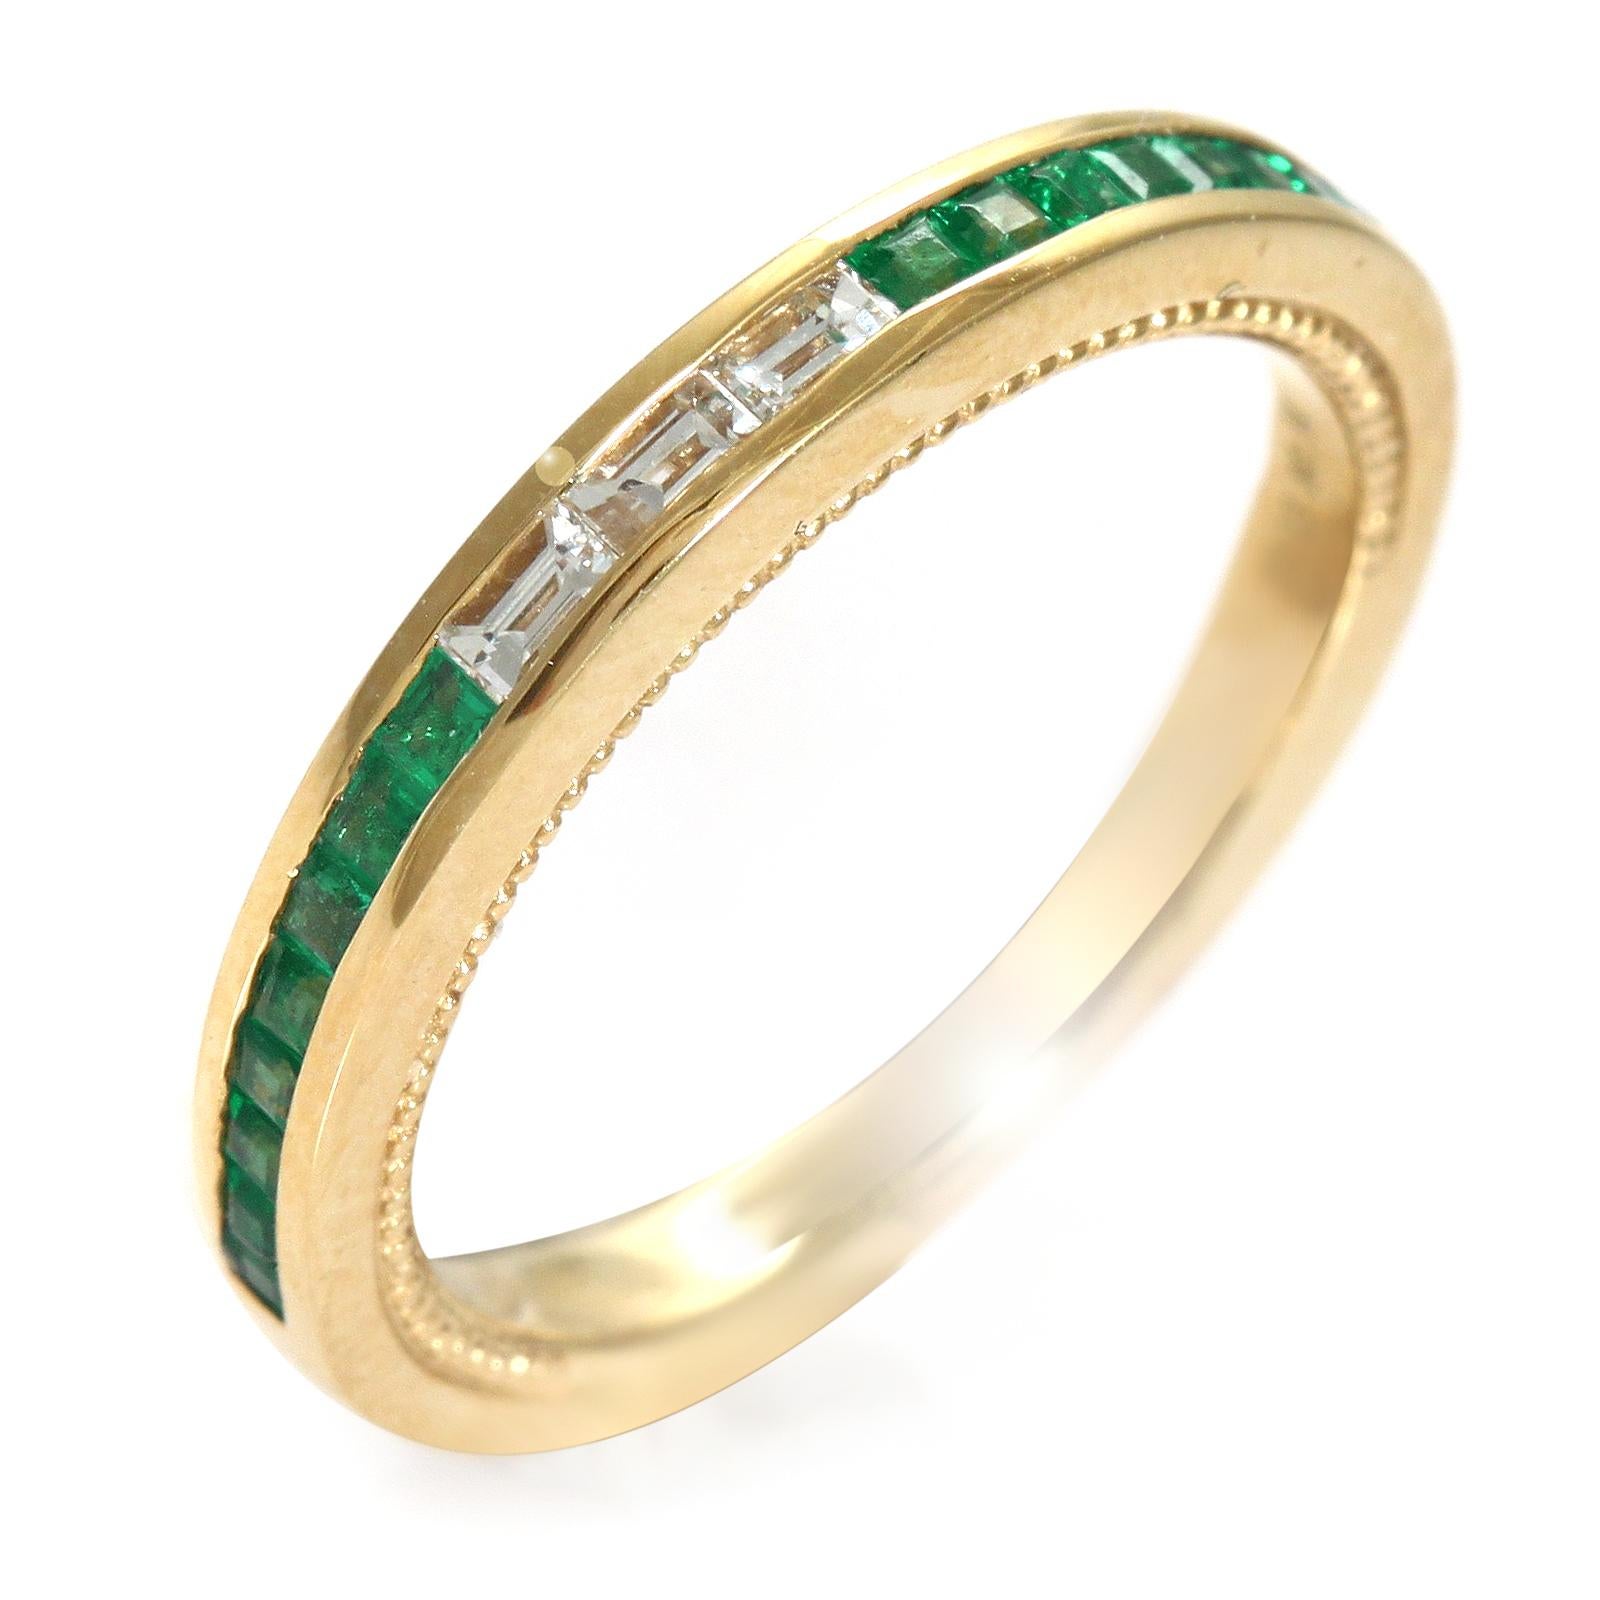 Baguette Cut 0.44 Carat Colombian Emerald and 0.15 Carat Diamonds in 18 Karat Gold Band Ring